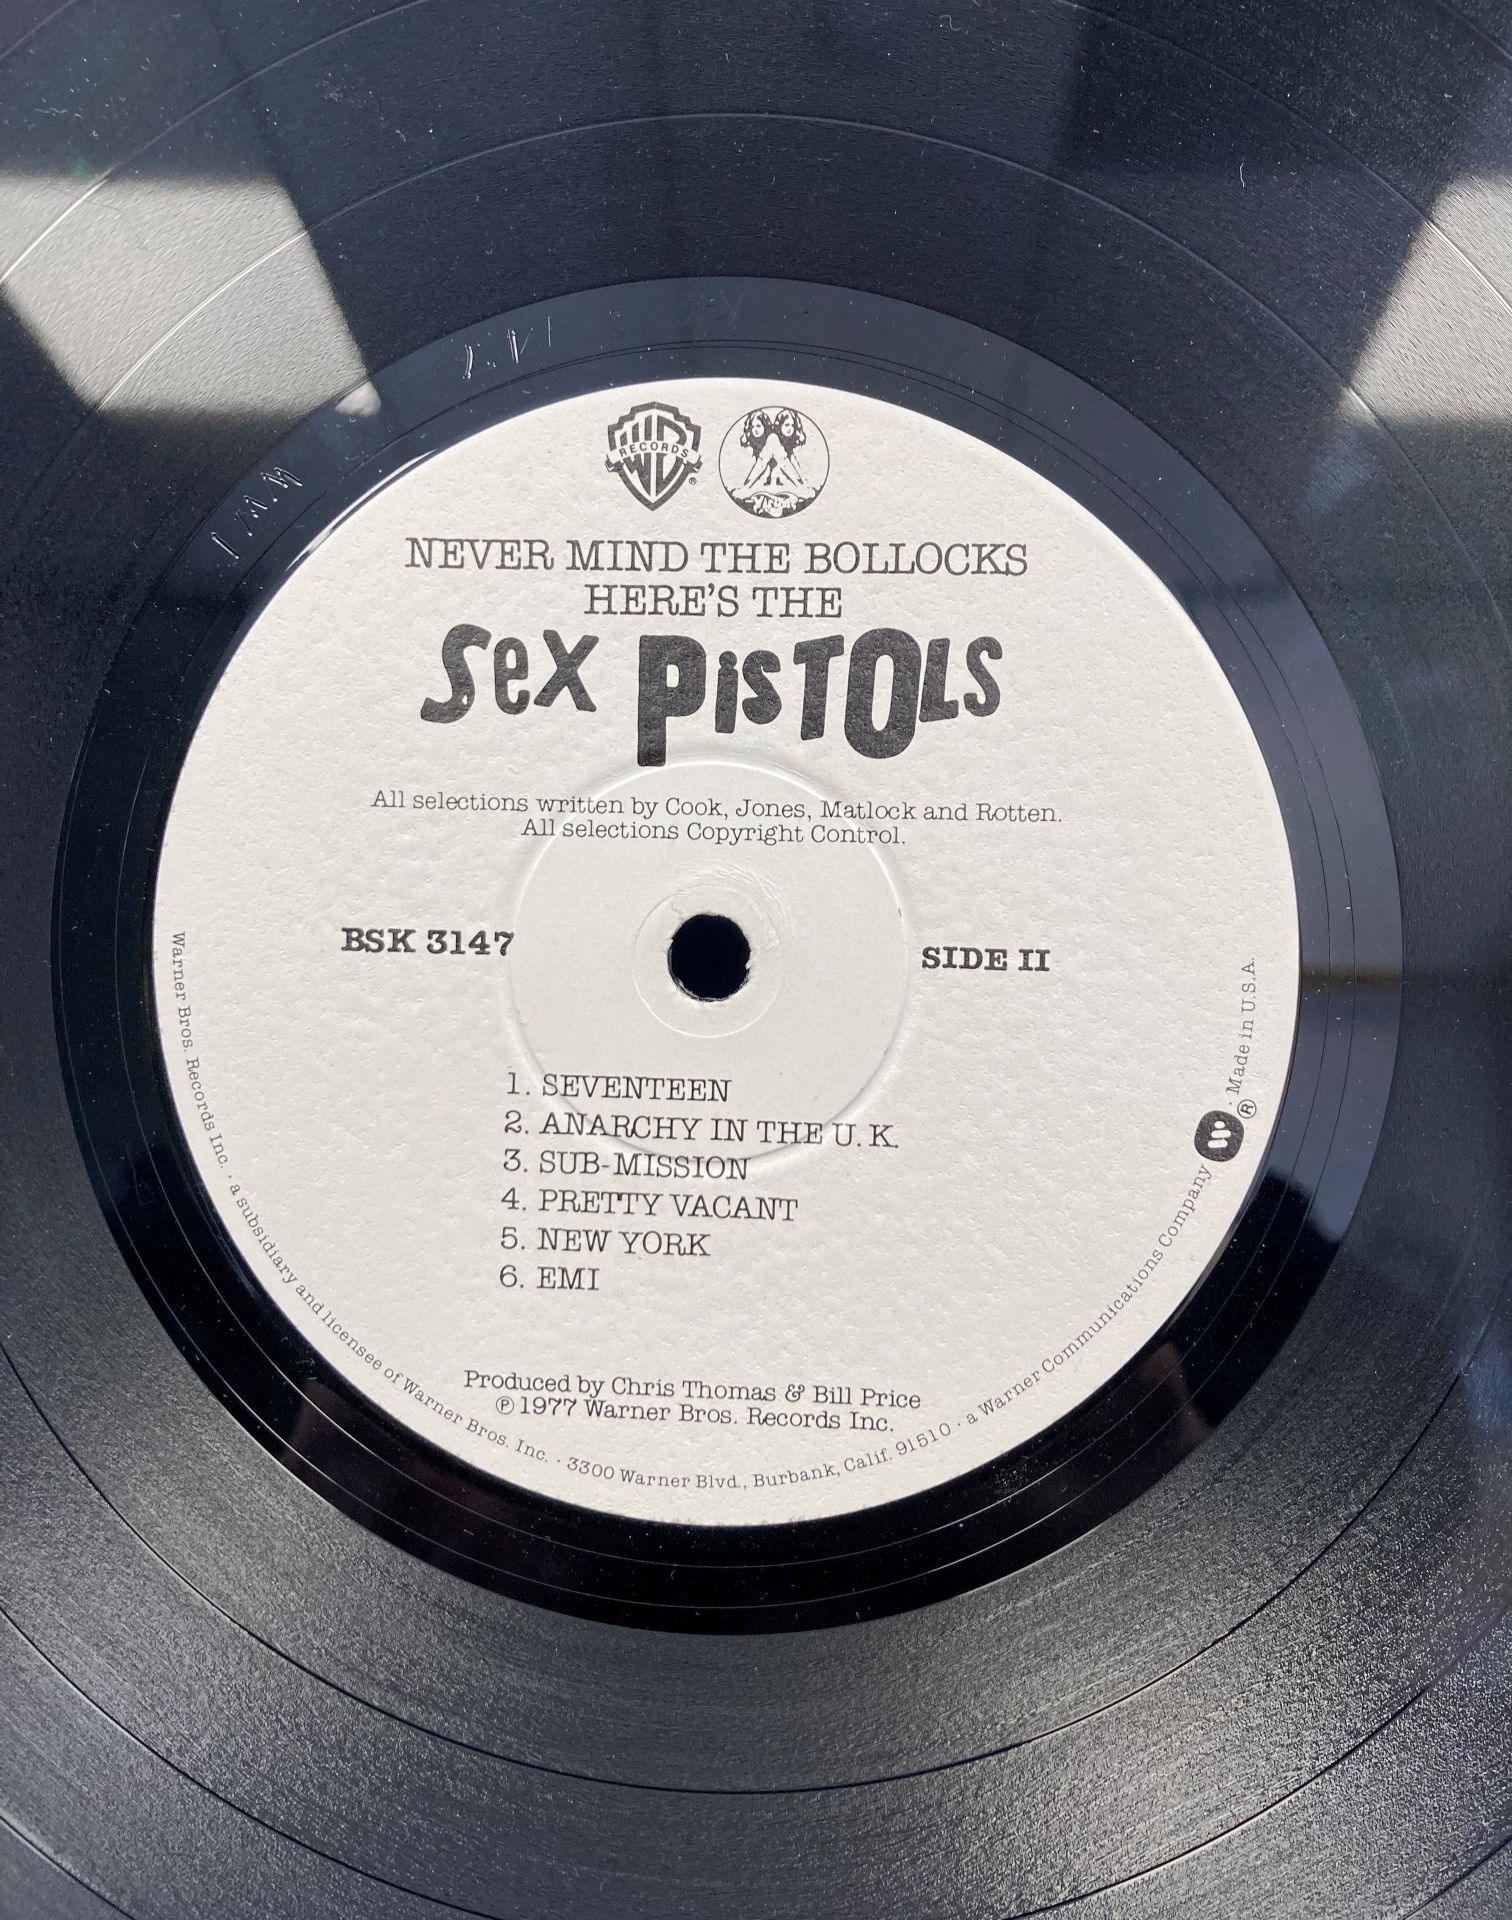 SEX PISTOLS: Never Mind The Bollocks Here's The Sex Pistols, LP, Warner Bros BSK3147, - Image 8 of 20